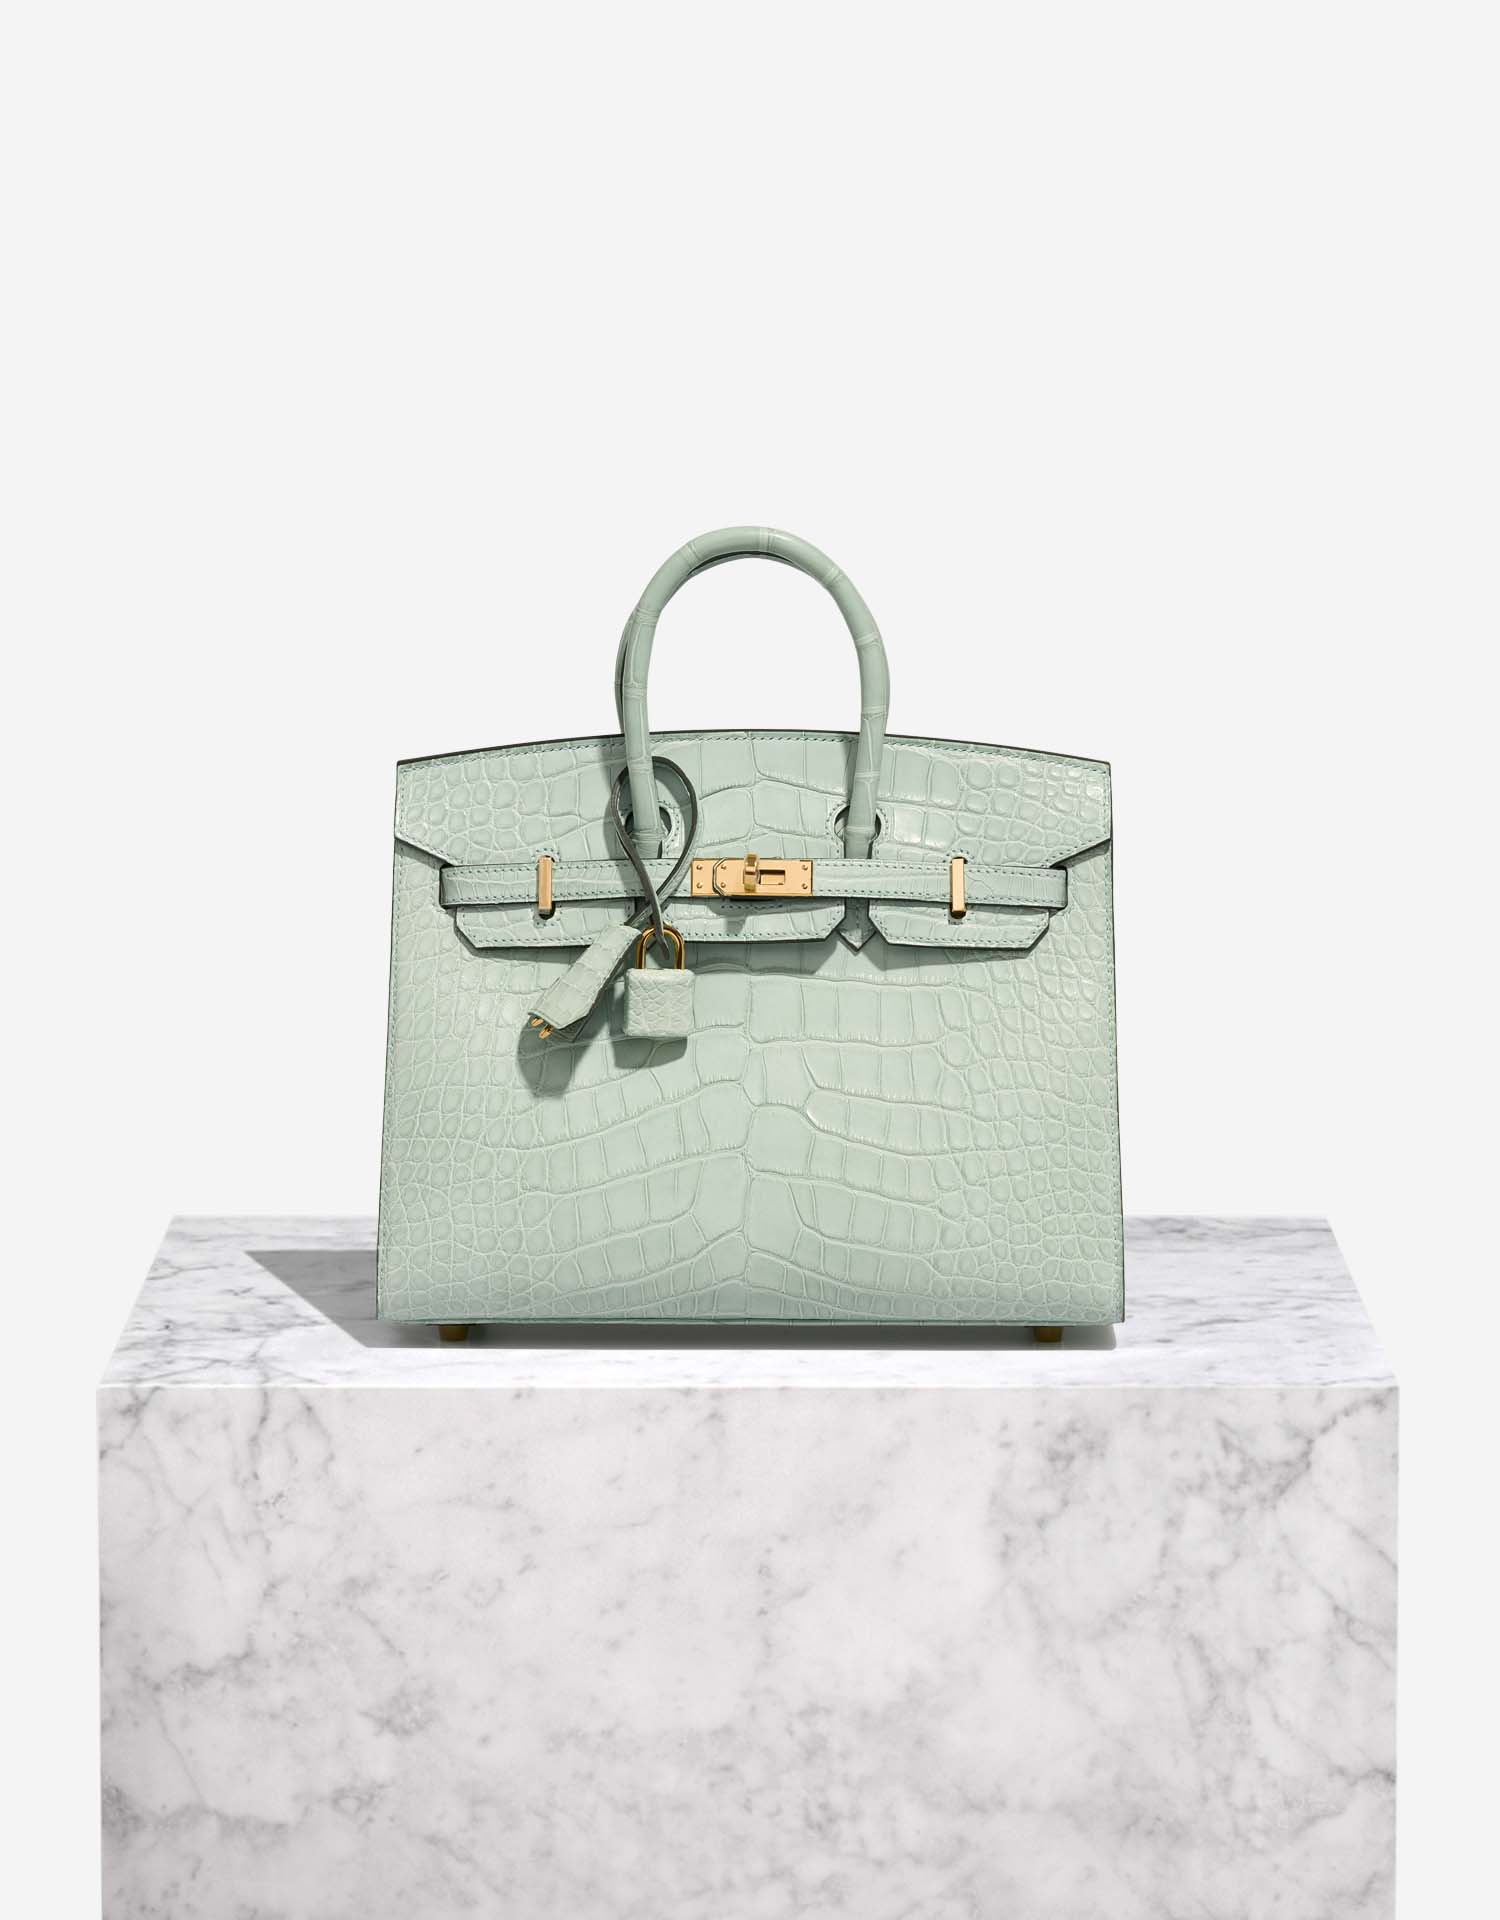 It's more than a bag, it's the iconic Hermès Birkin 25 Vert D'Eau Matt